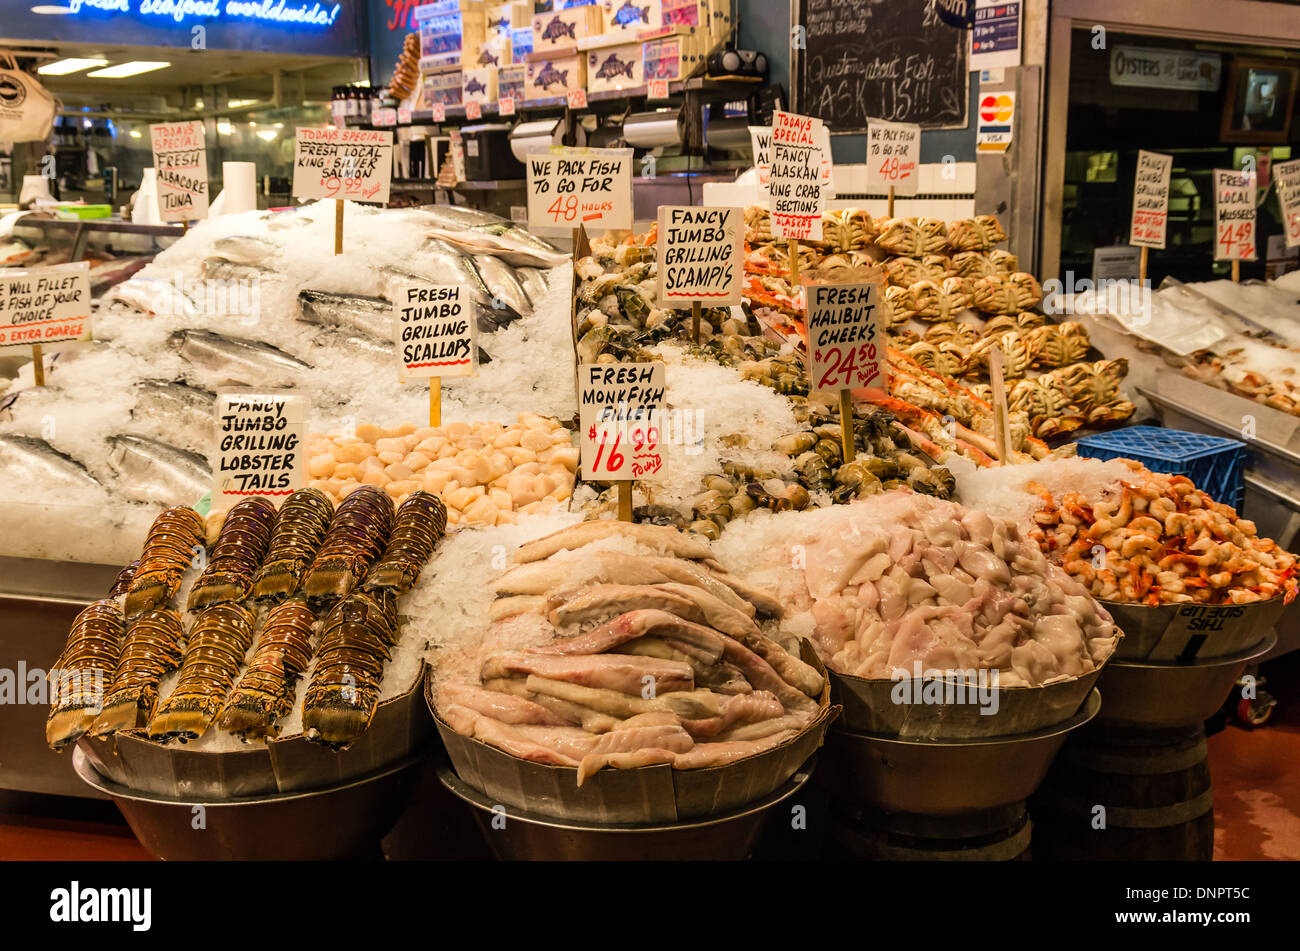 Seafood on ice at a fish monger's market stall Pike Place Market Seattle, Washington, USA Stock Photo